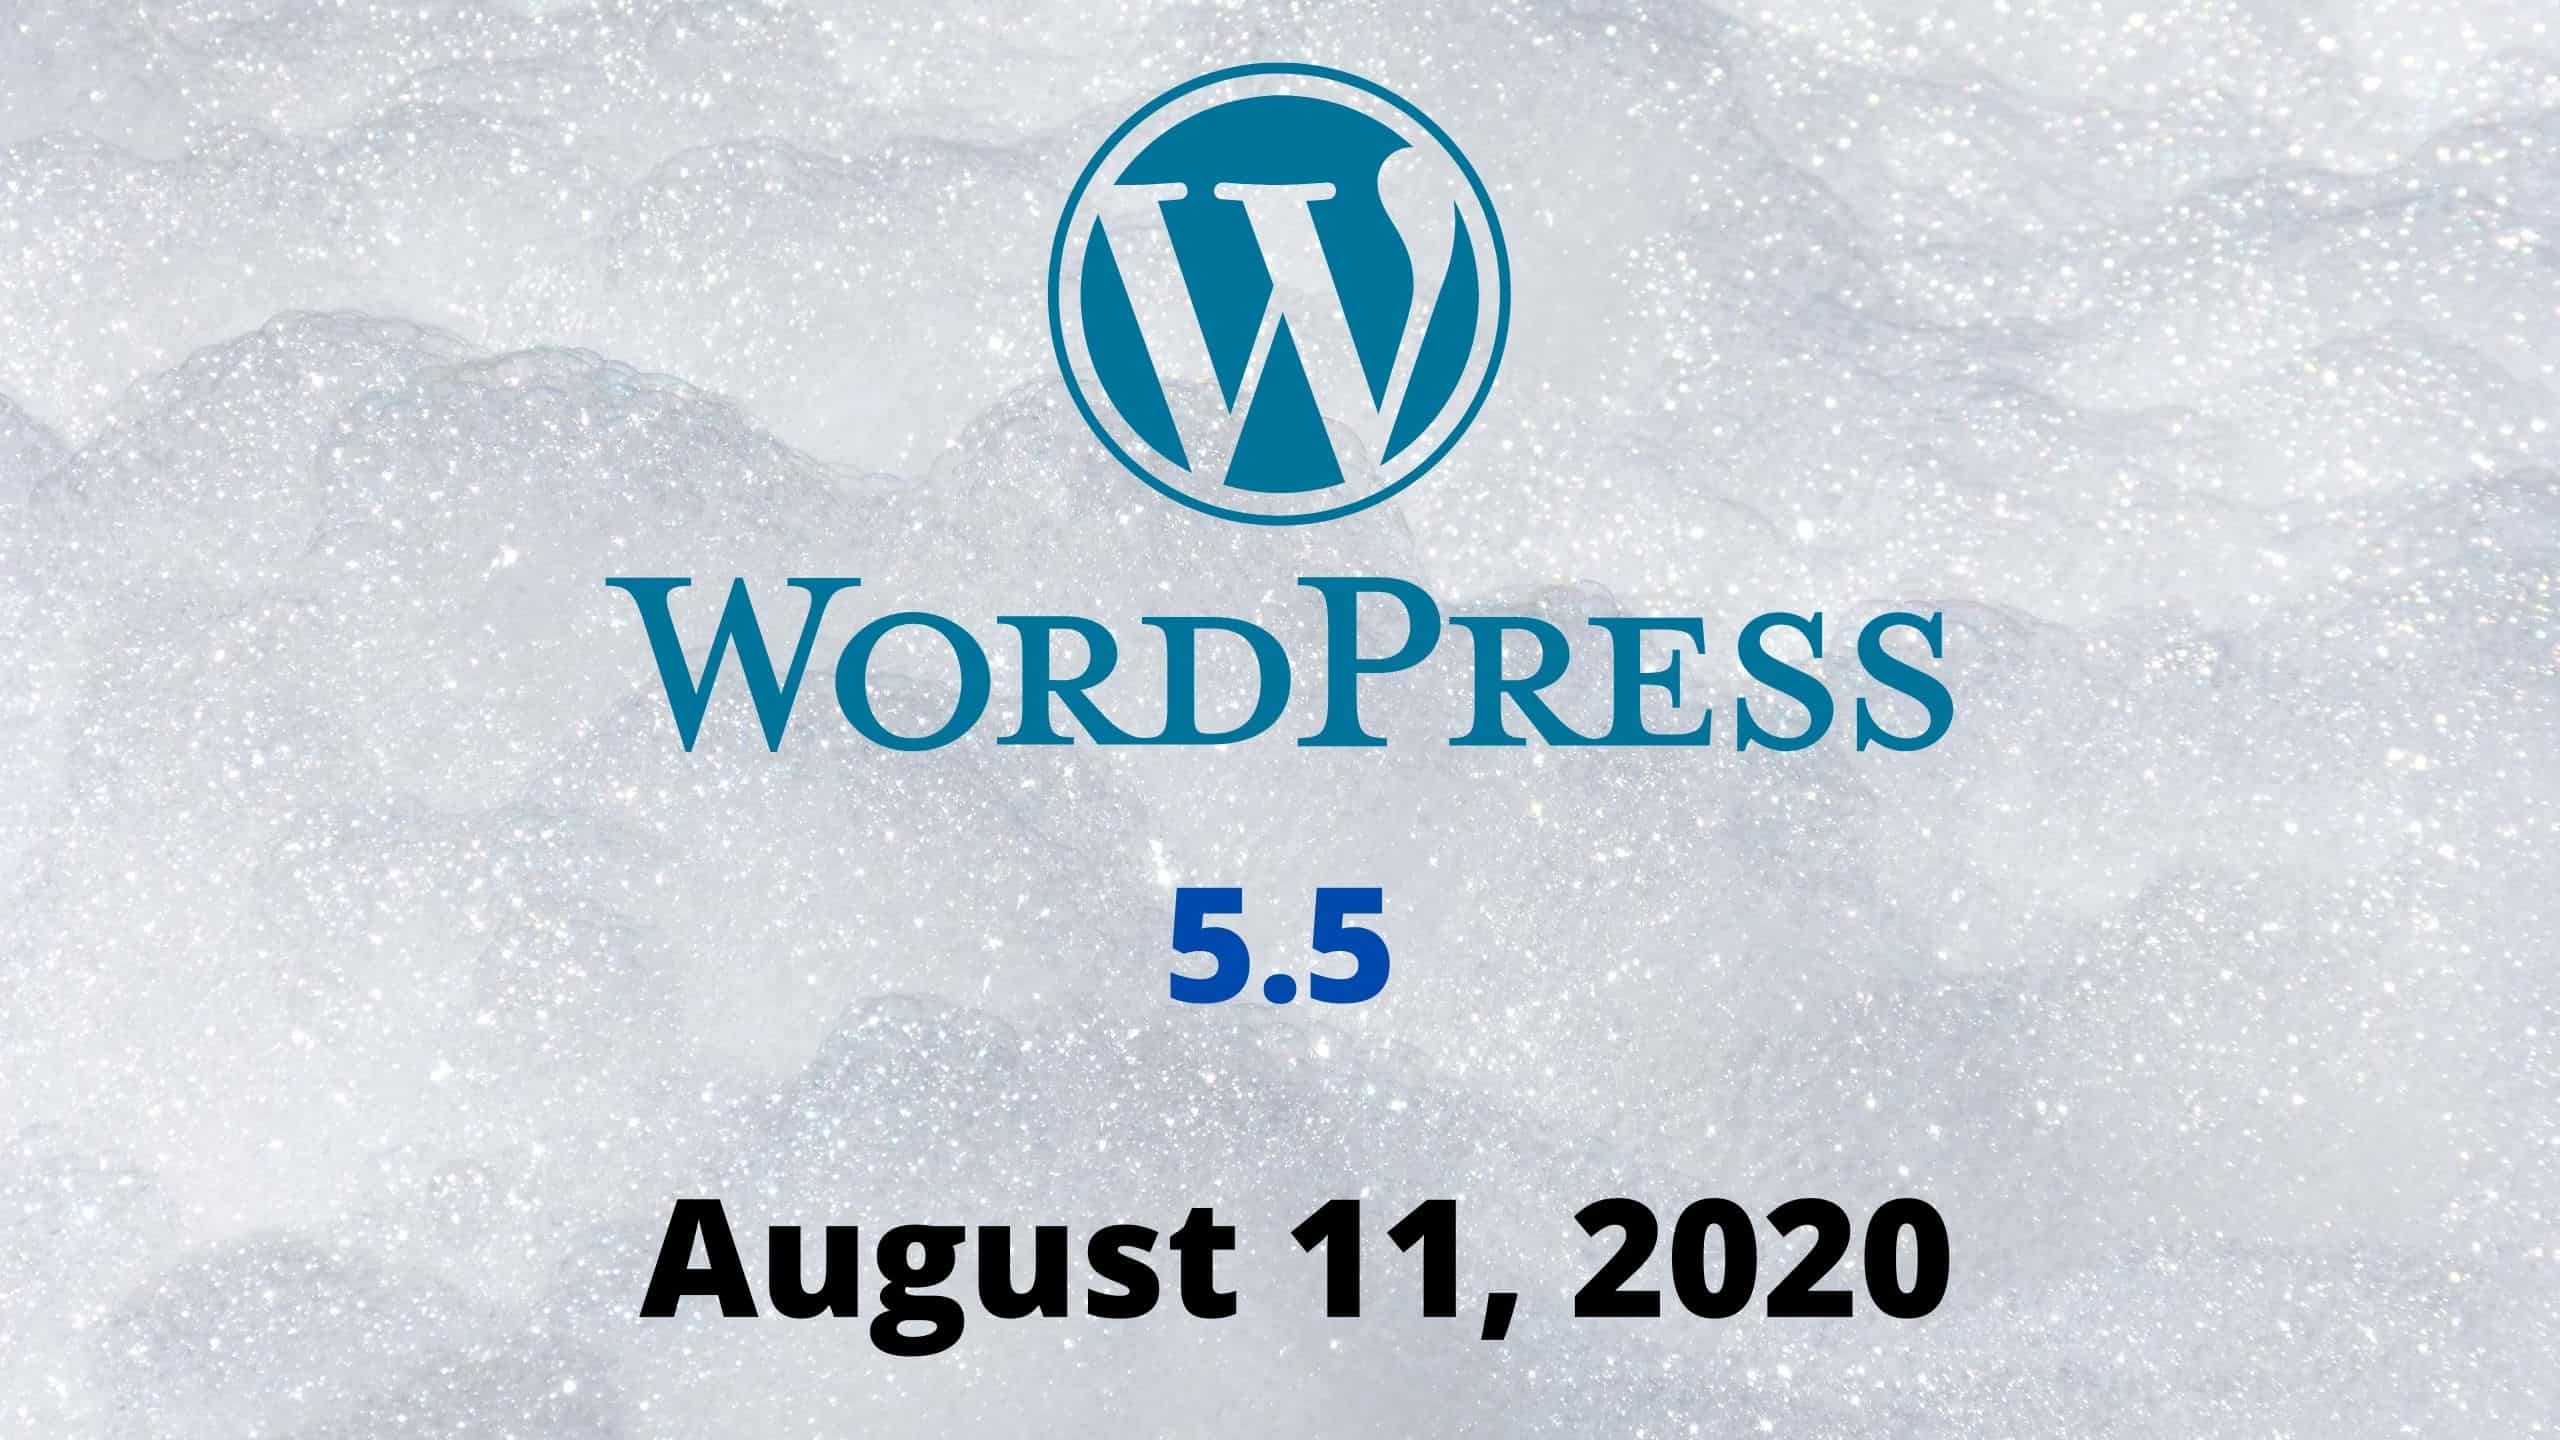 What’s new in WordPress 5.5?